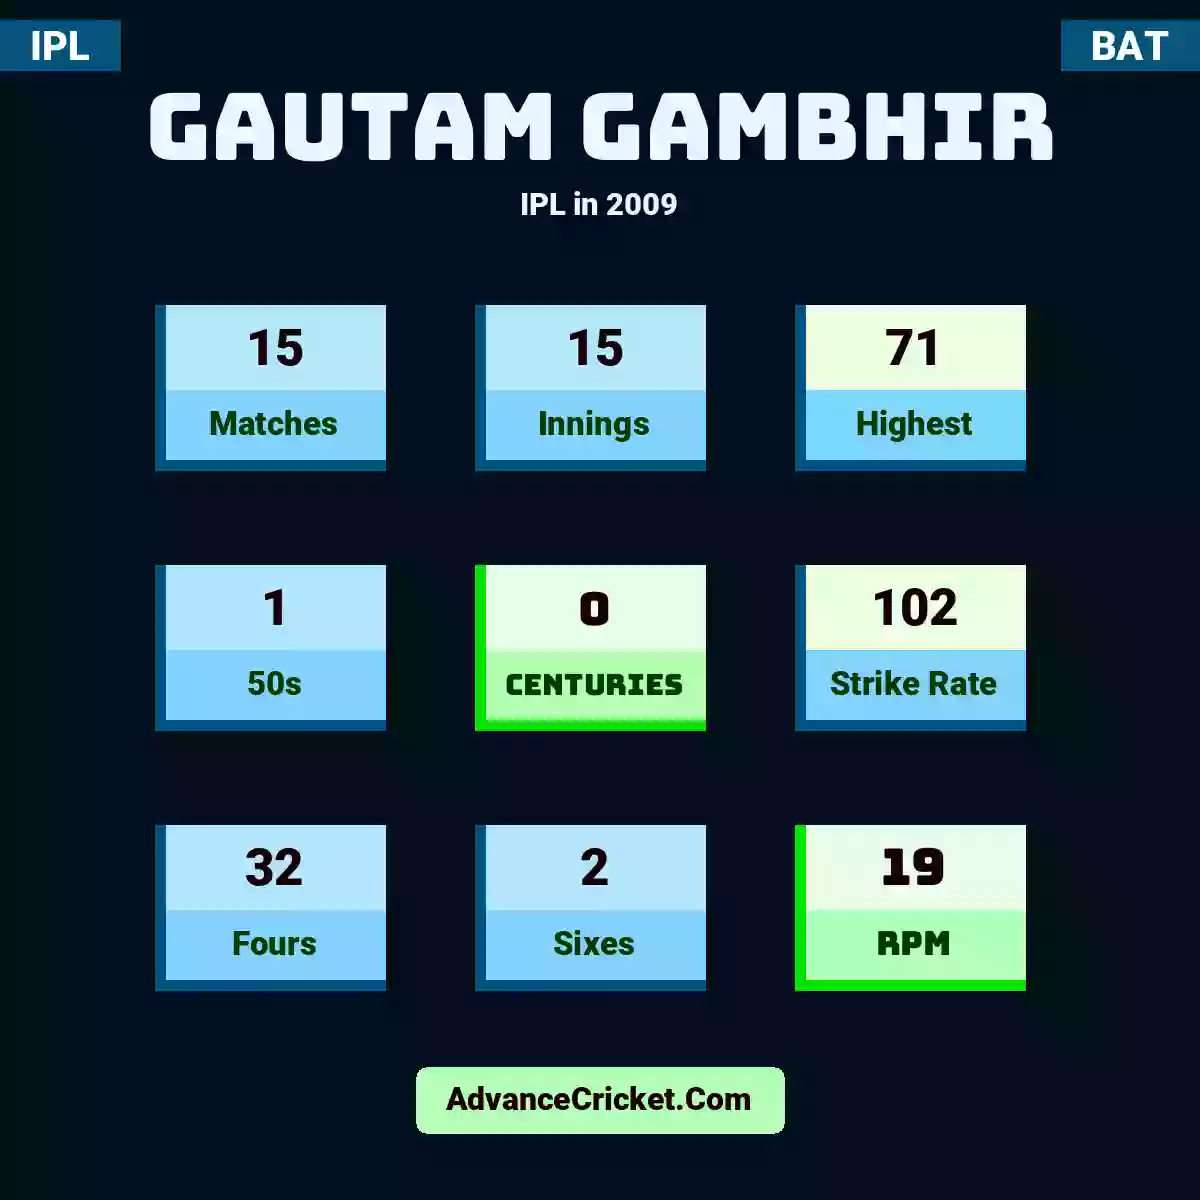 Gautam Gambhir IPL  in 2009, Gautam Gambhir played 15 matches, scored 71 runs as highest, 1 half-centuries, and 0 centuries, with a strike rate of 102. G.Gambhir hit 32 fours and 2 sixes, with an RPM of 19.